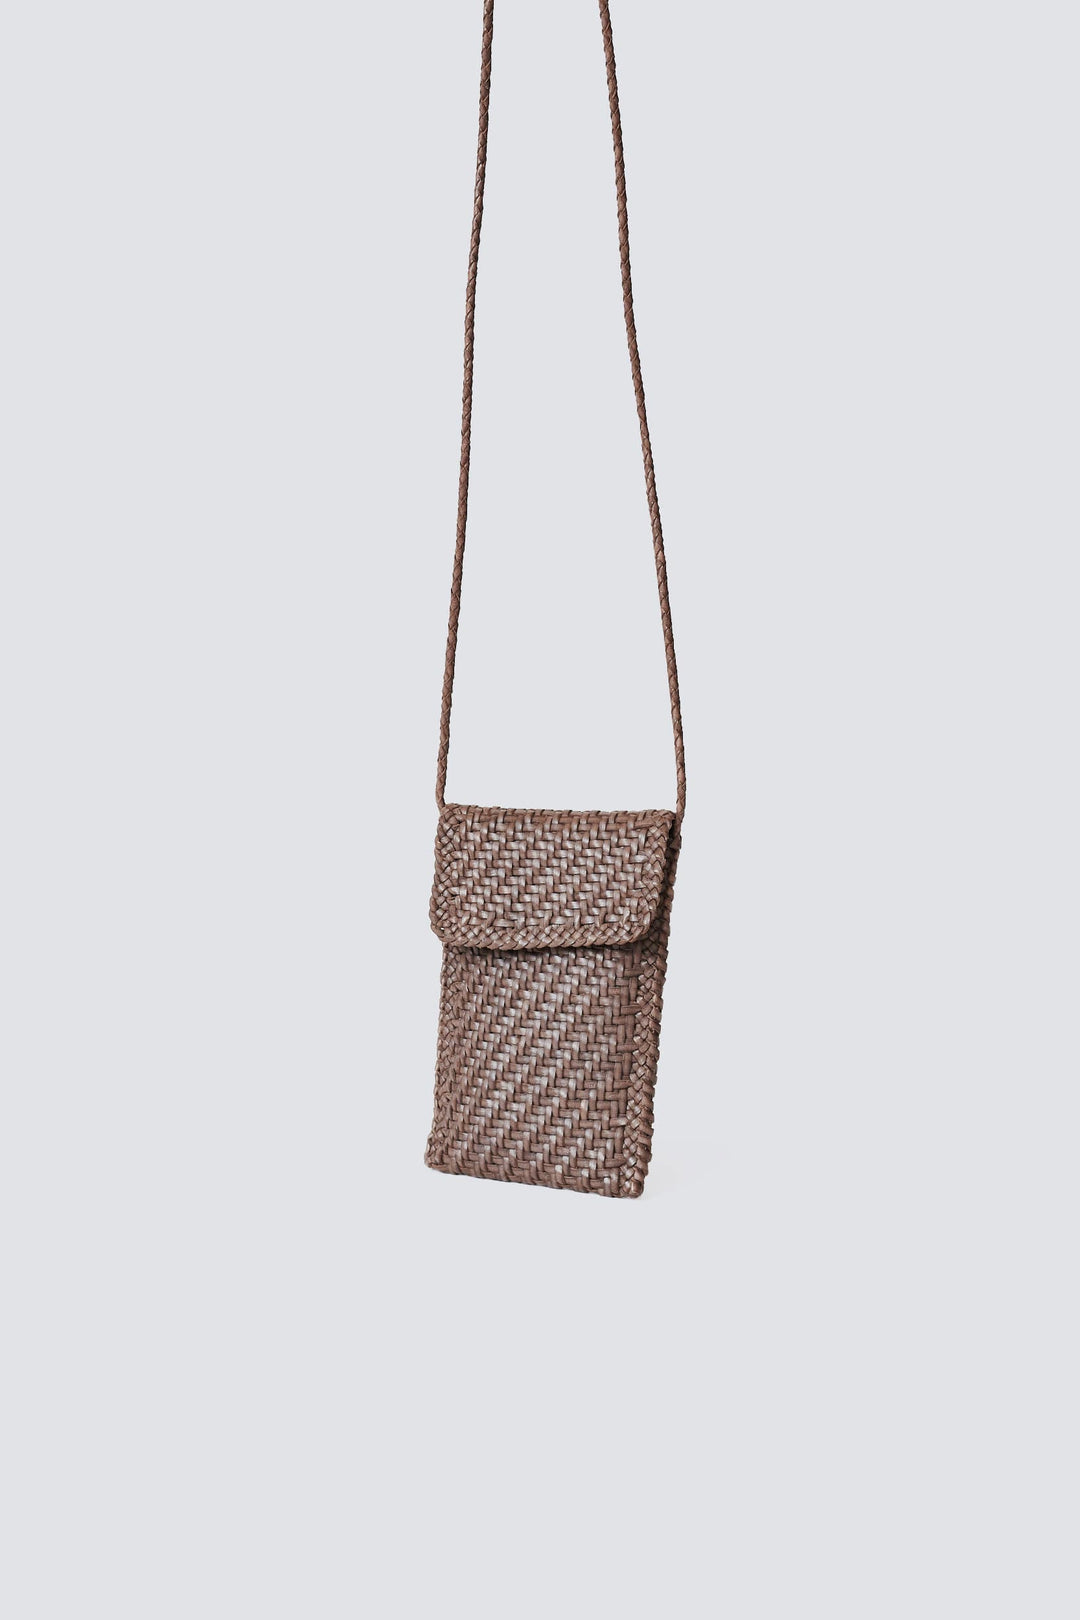 Dragon Diffusion woven leather bag handmade - Phone Crossbody Grey